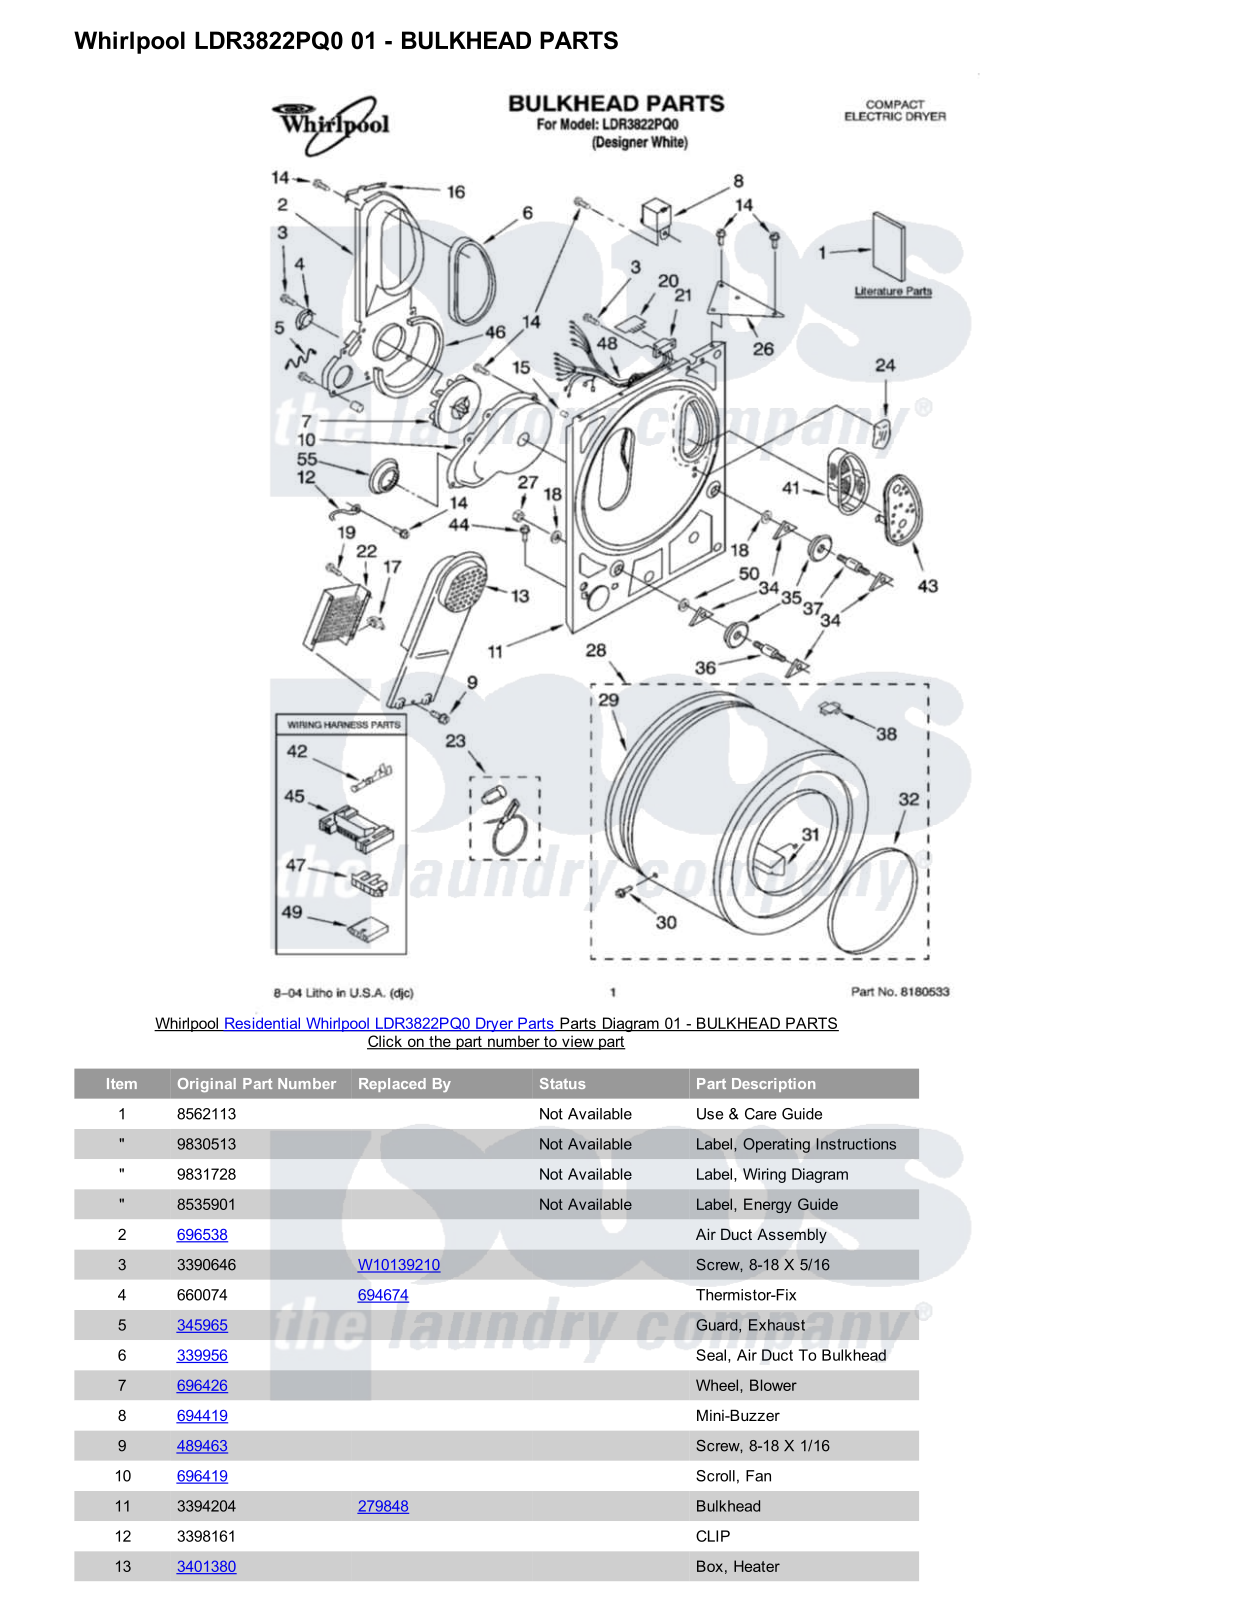 Whirlpool LDR3822PQ0 Parts Diagram